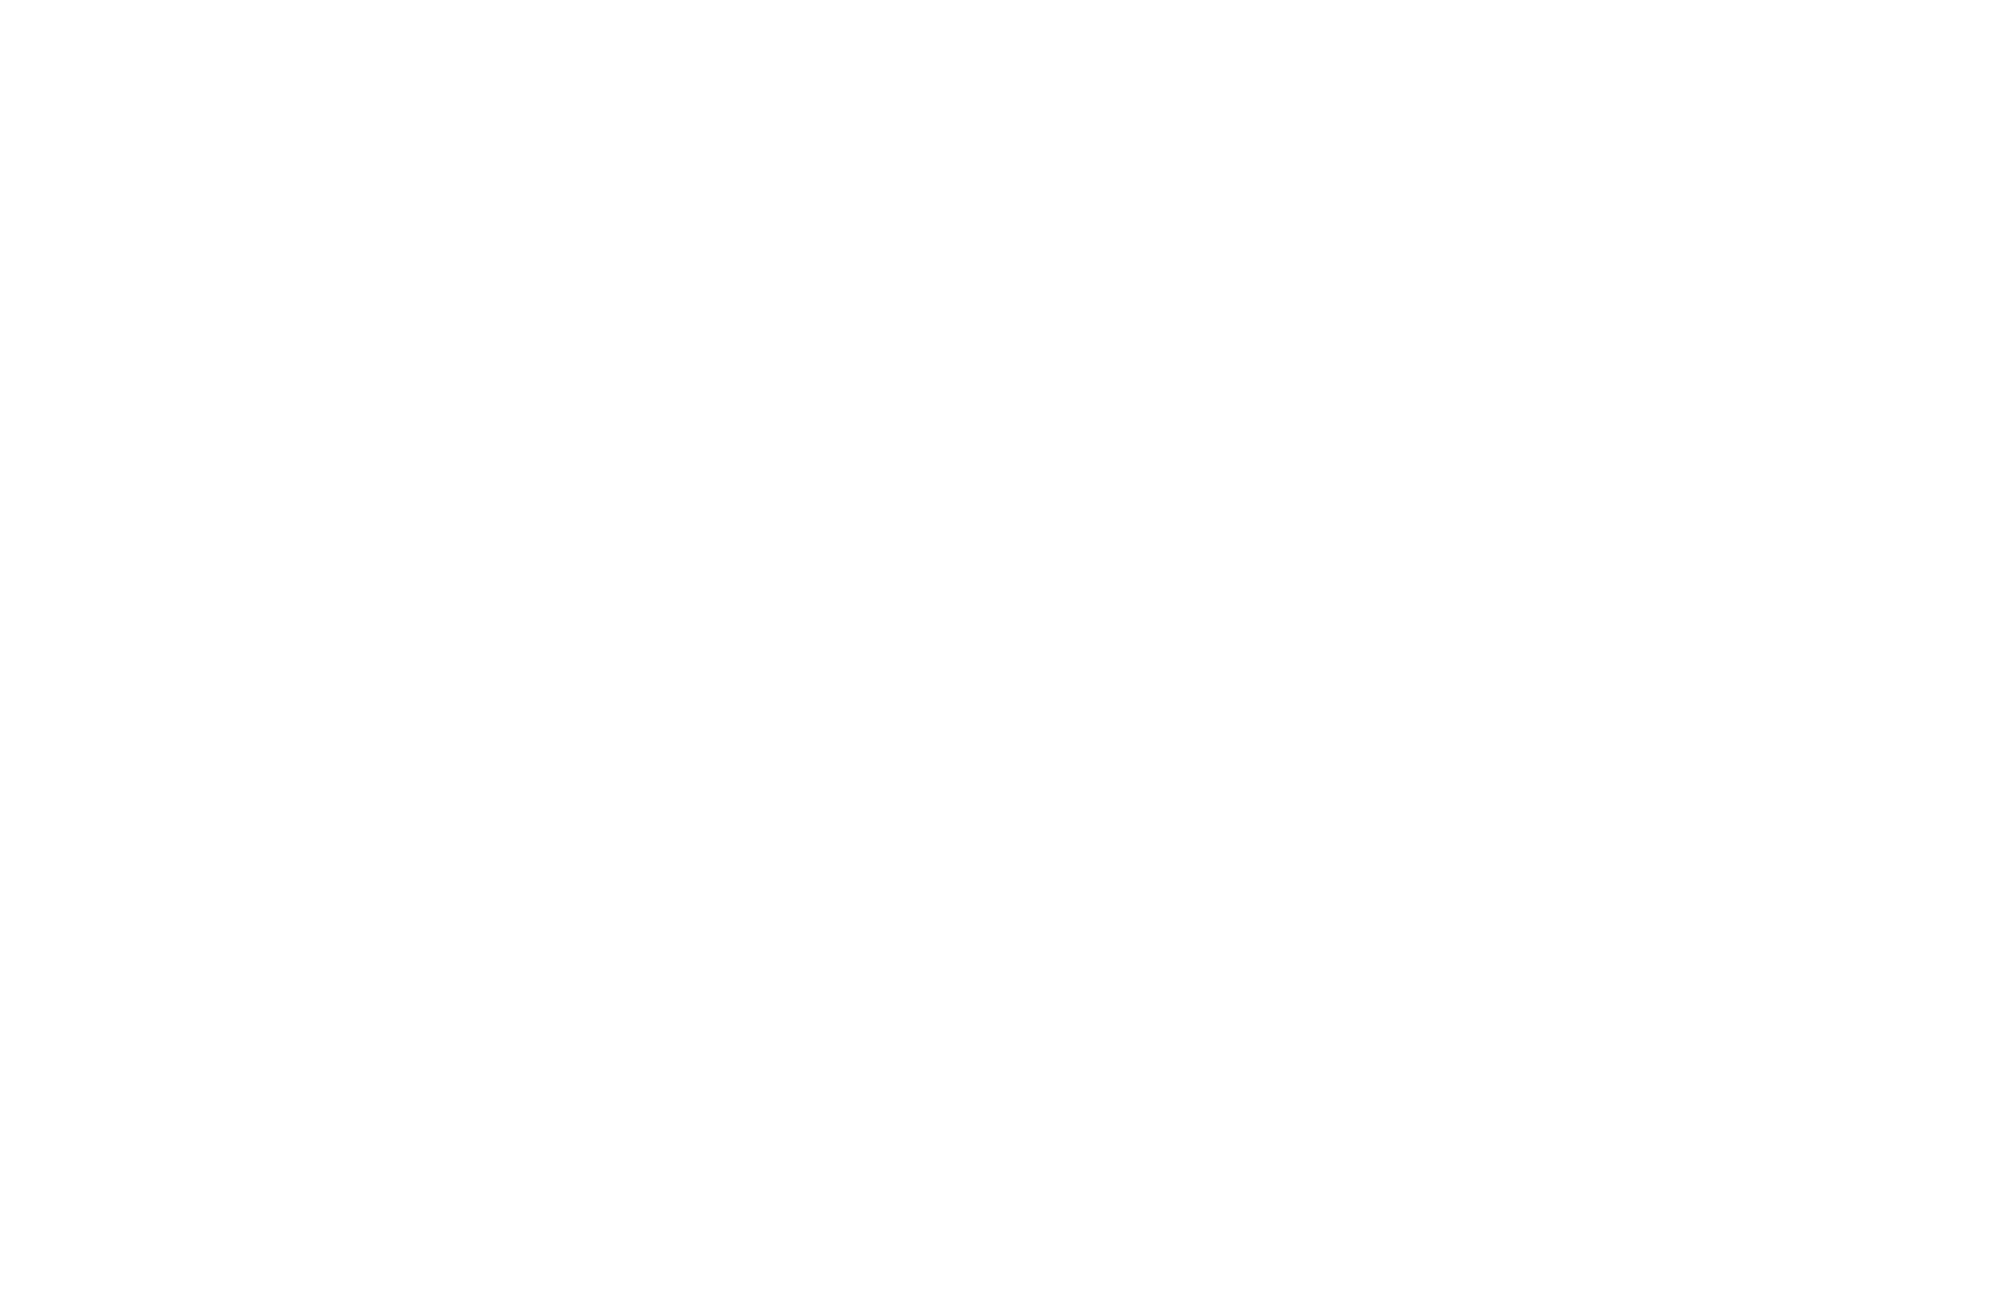 Restaurant Safran